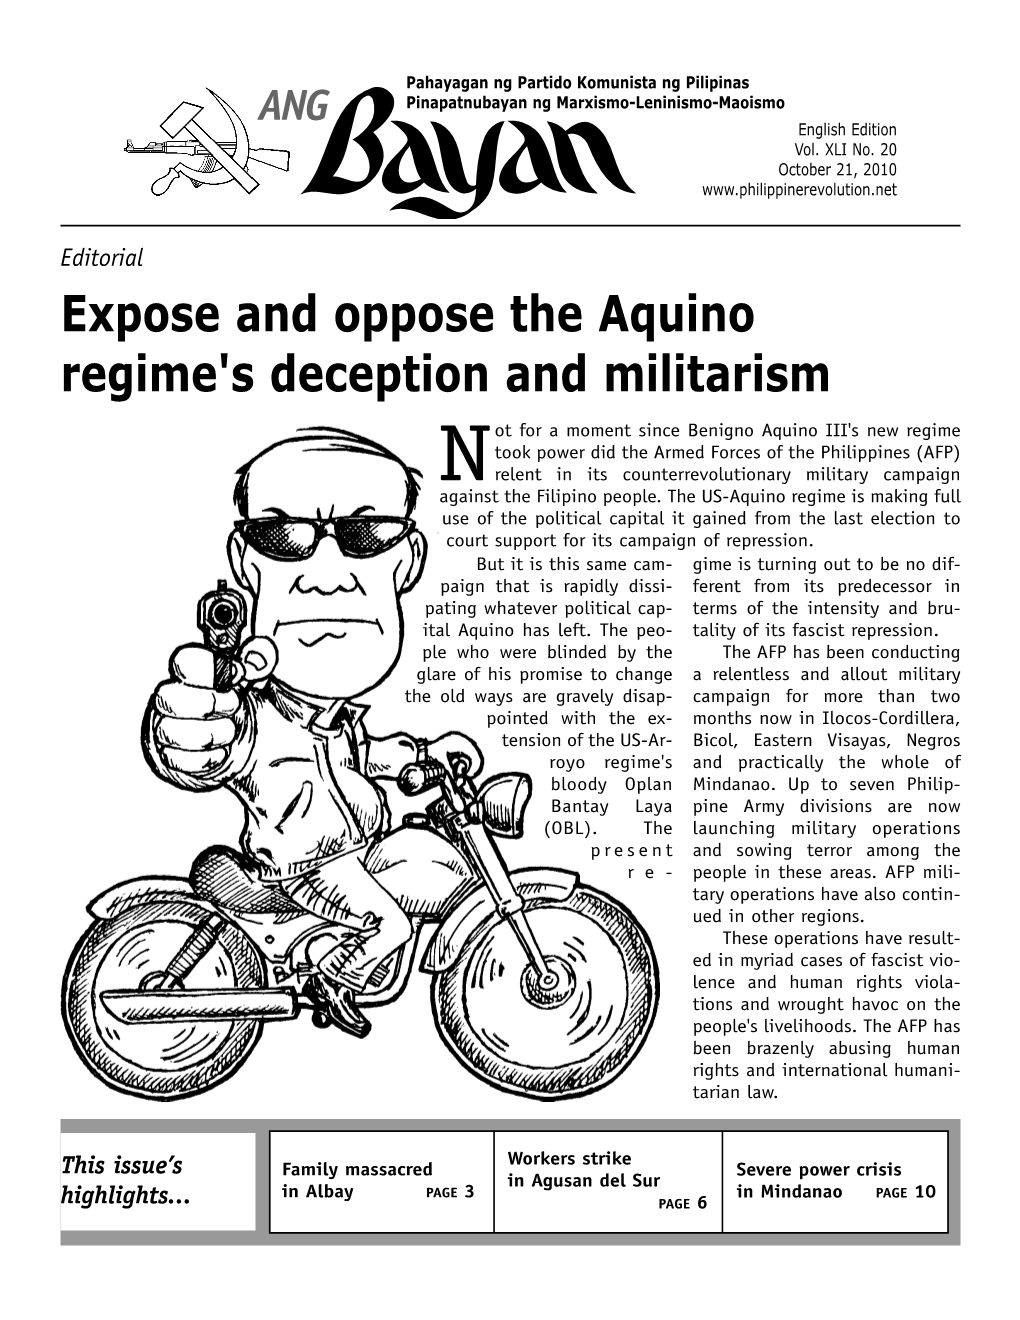 Expose and Oppose the Aquino Regime's Deception and Militarism